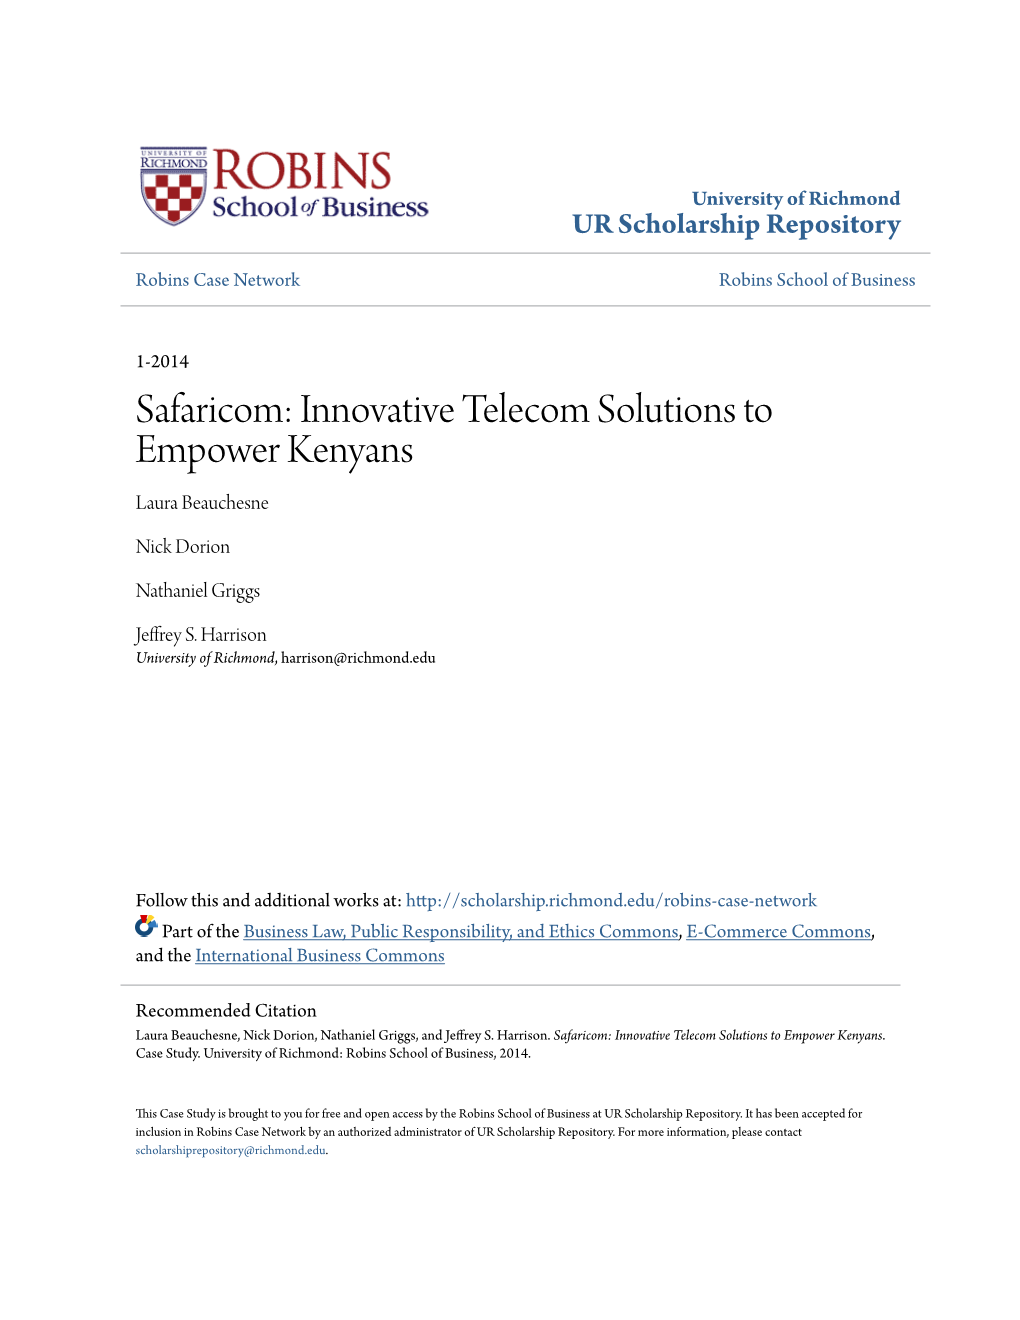 Safaricom: Innovative Telecom Solutions to Empower Kenyans Laura Beauchesne